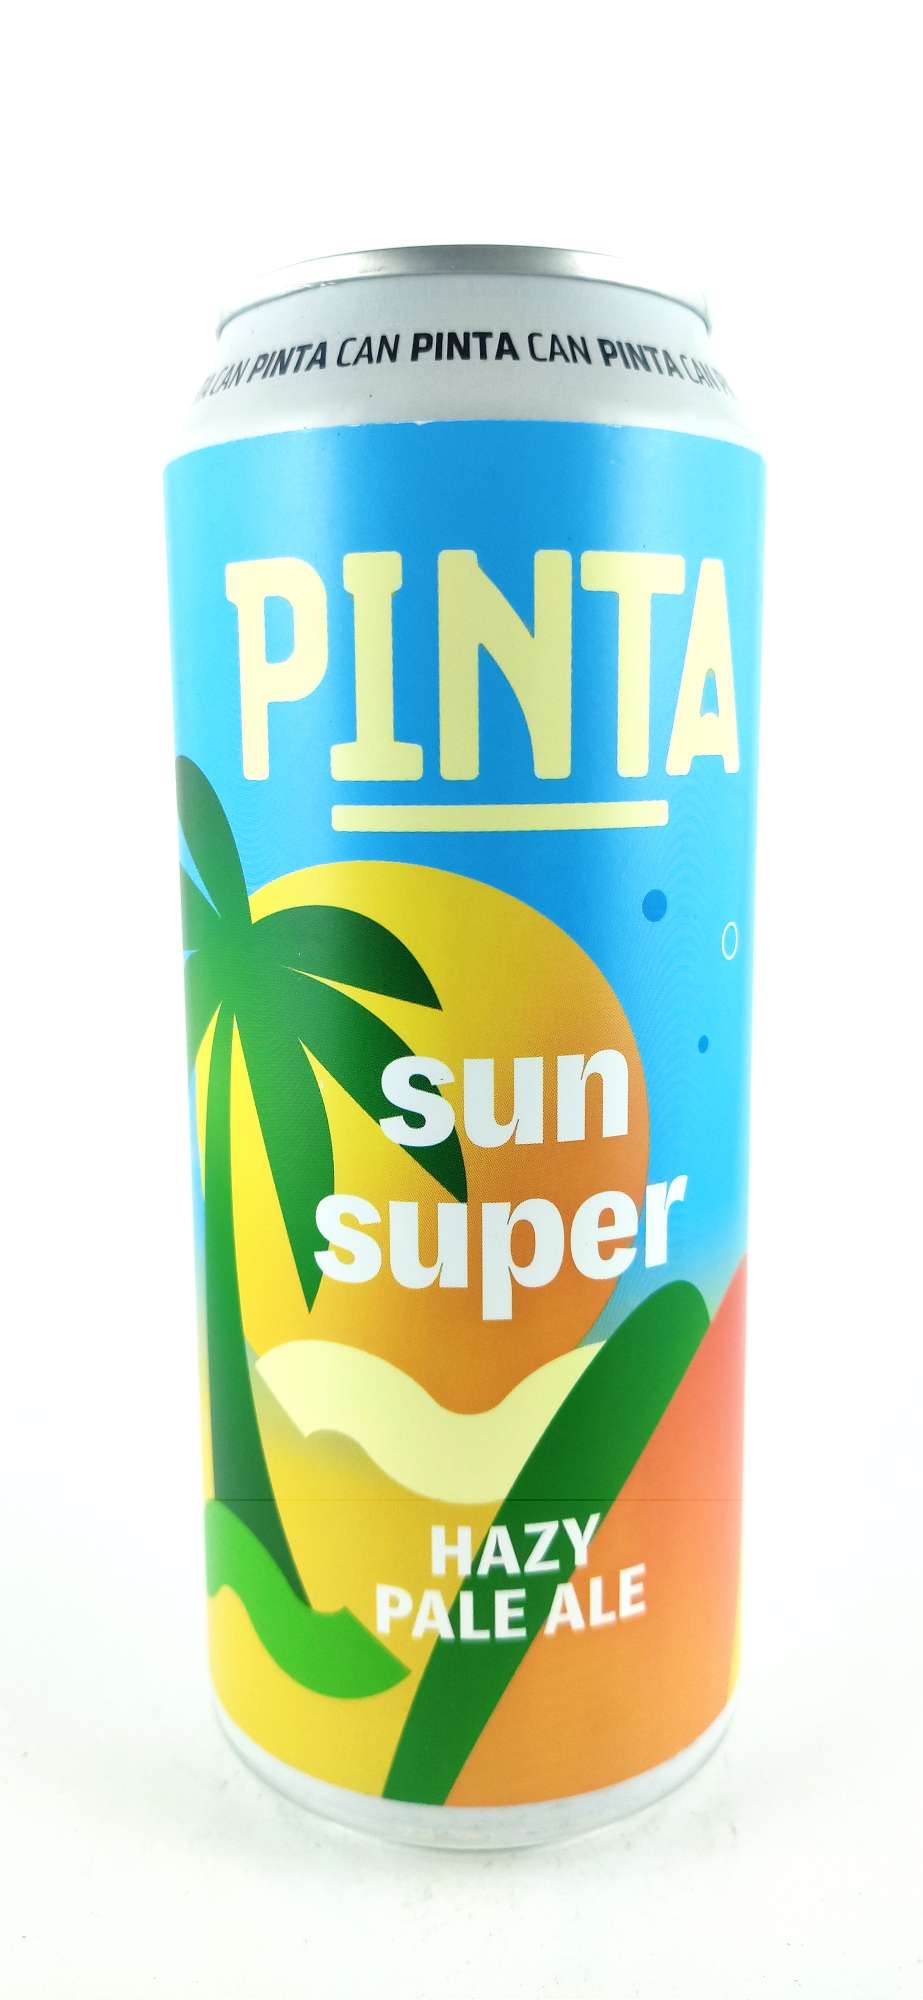 Pinta Sun Super Single Hop IPA 12°